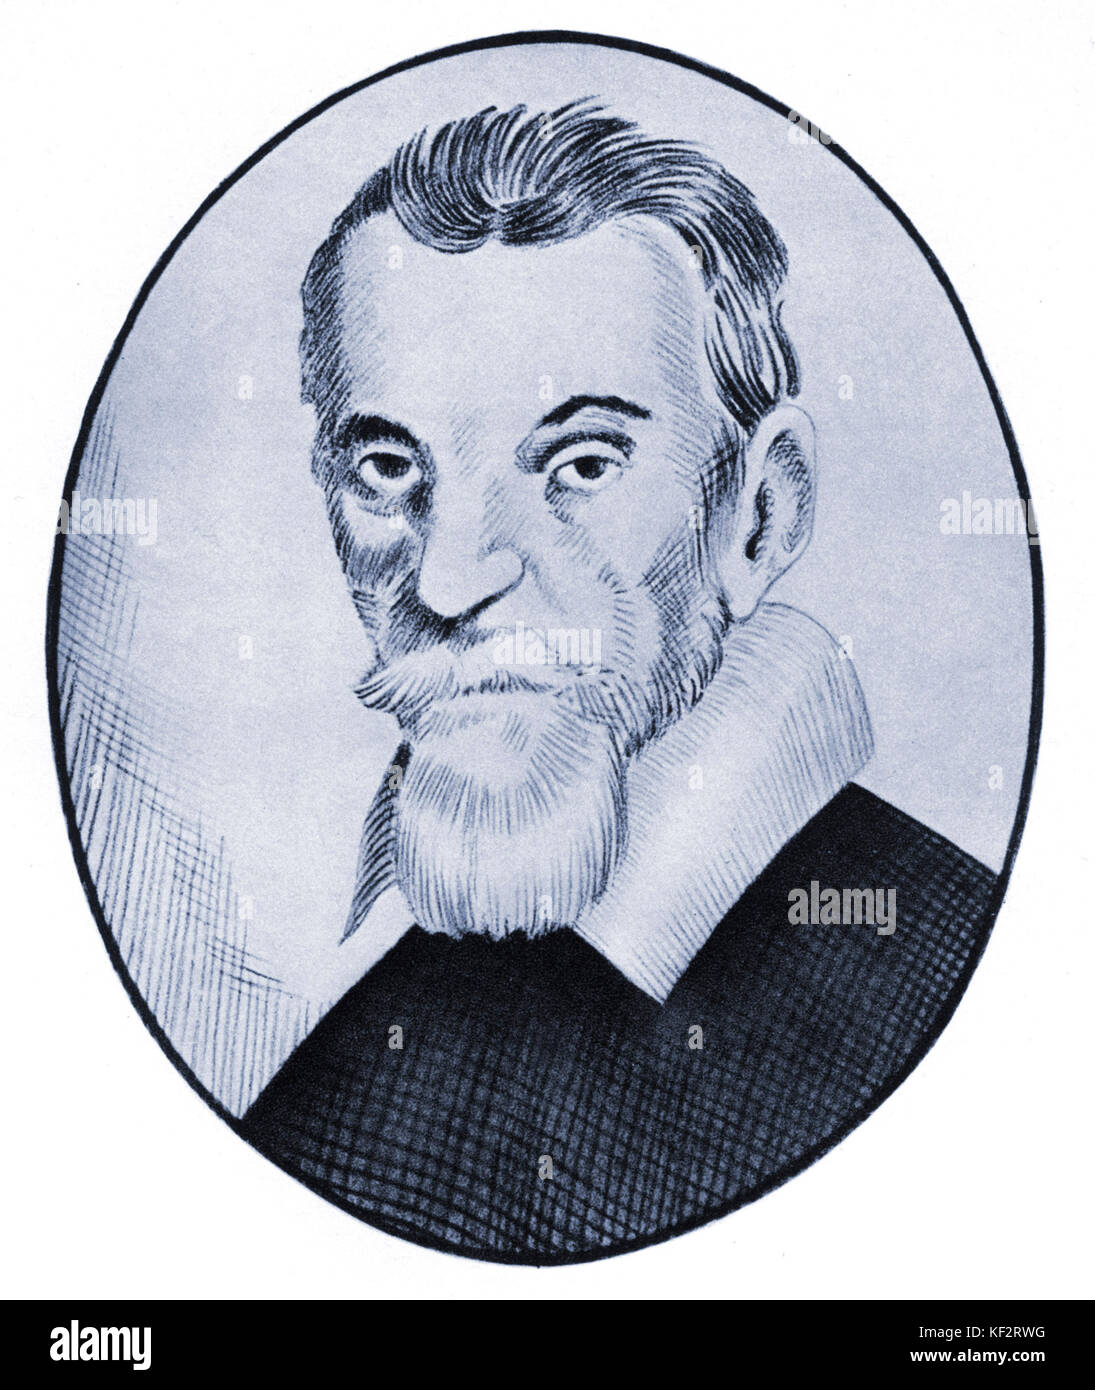 Claudio MONTEVERDI - oval portrait  . Italian composer. 15 May 1567 - 29 November 1643. Stock Photo